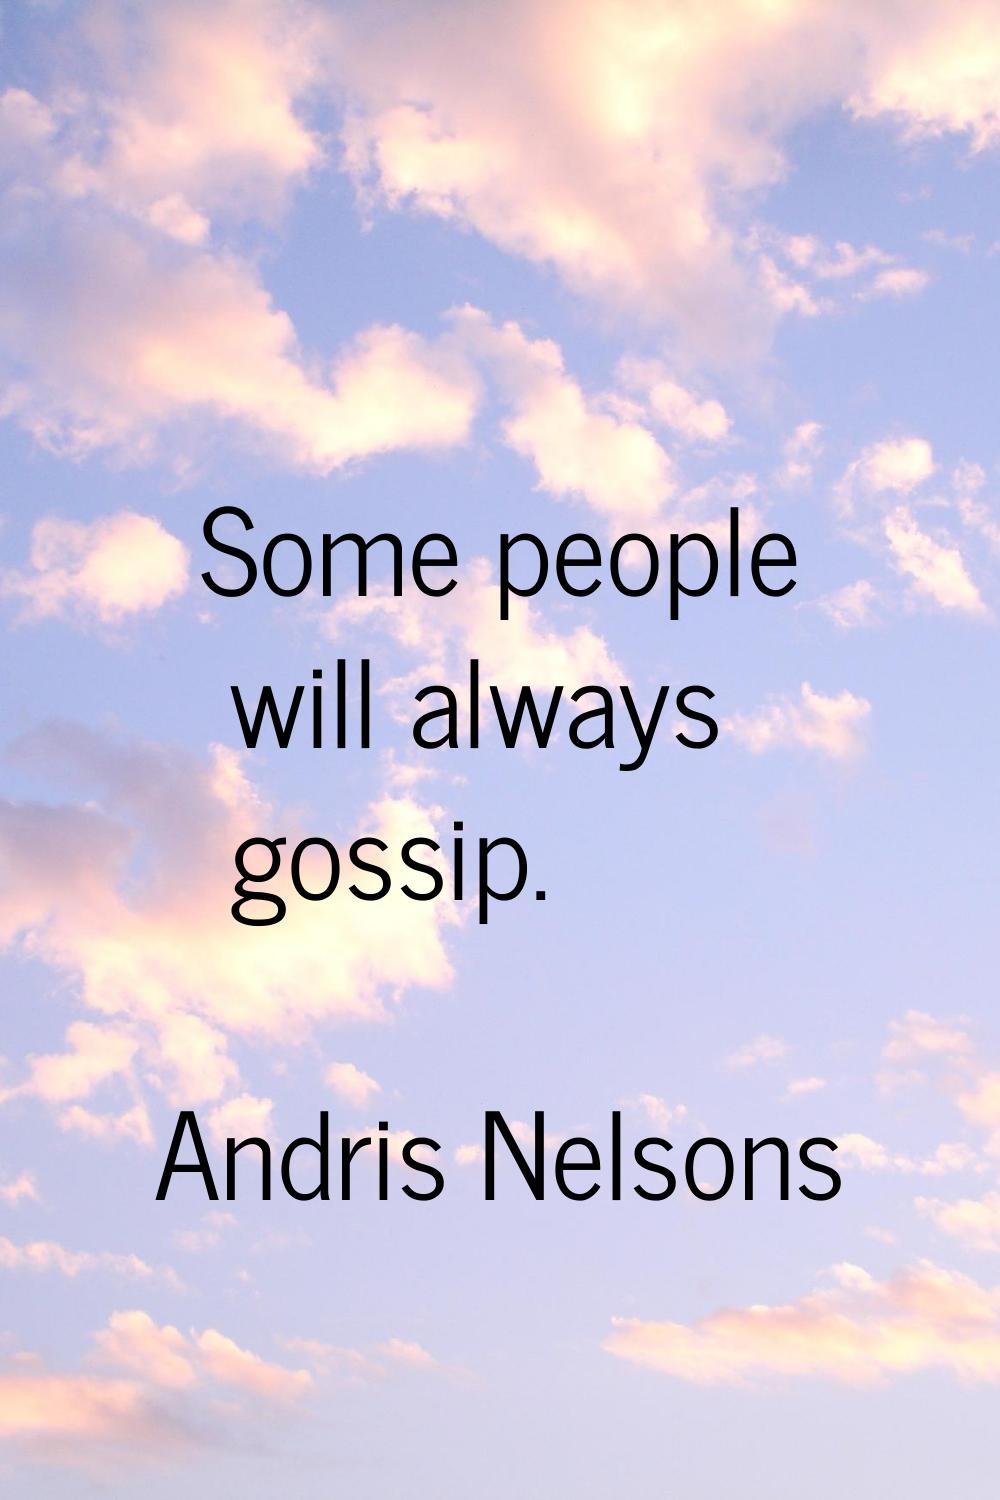 Some people will always gossip.